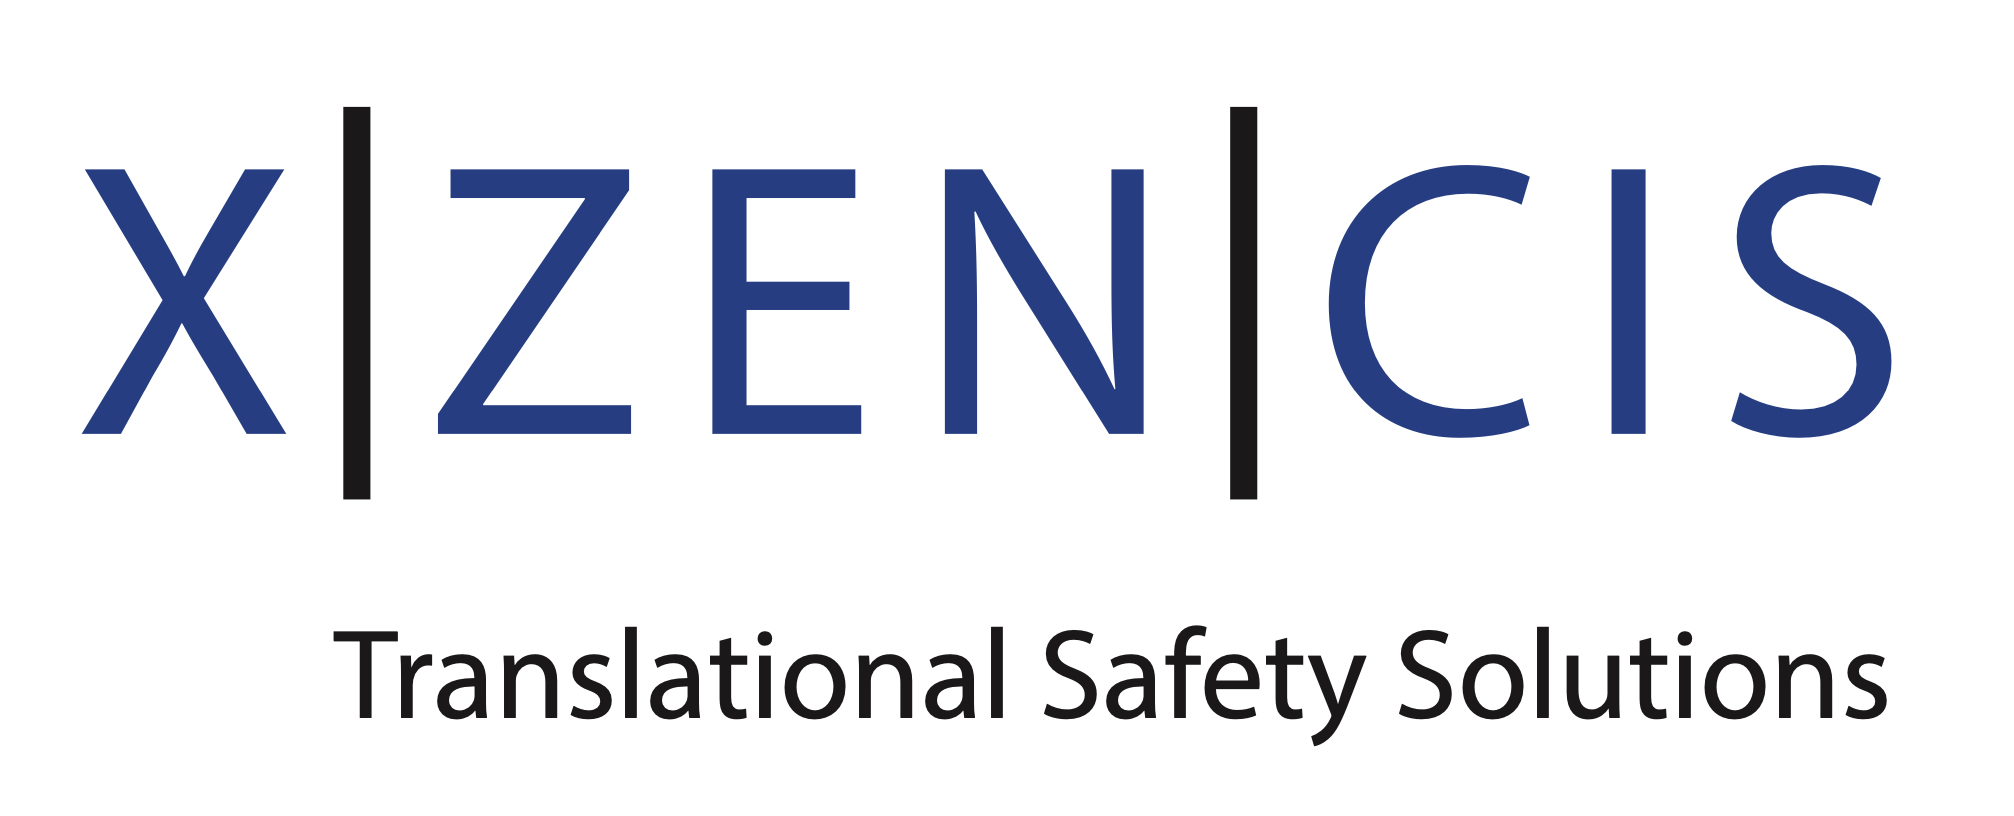 Xzencis support for Organizational Change Management